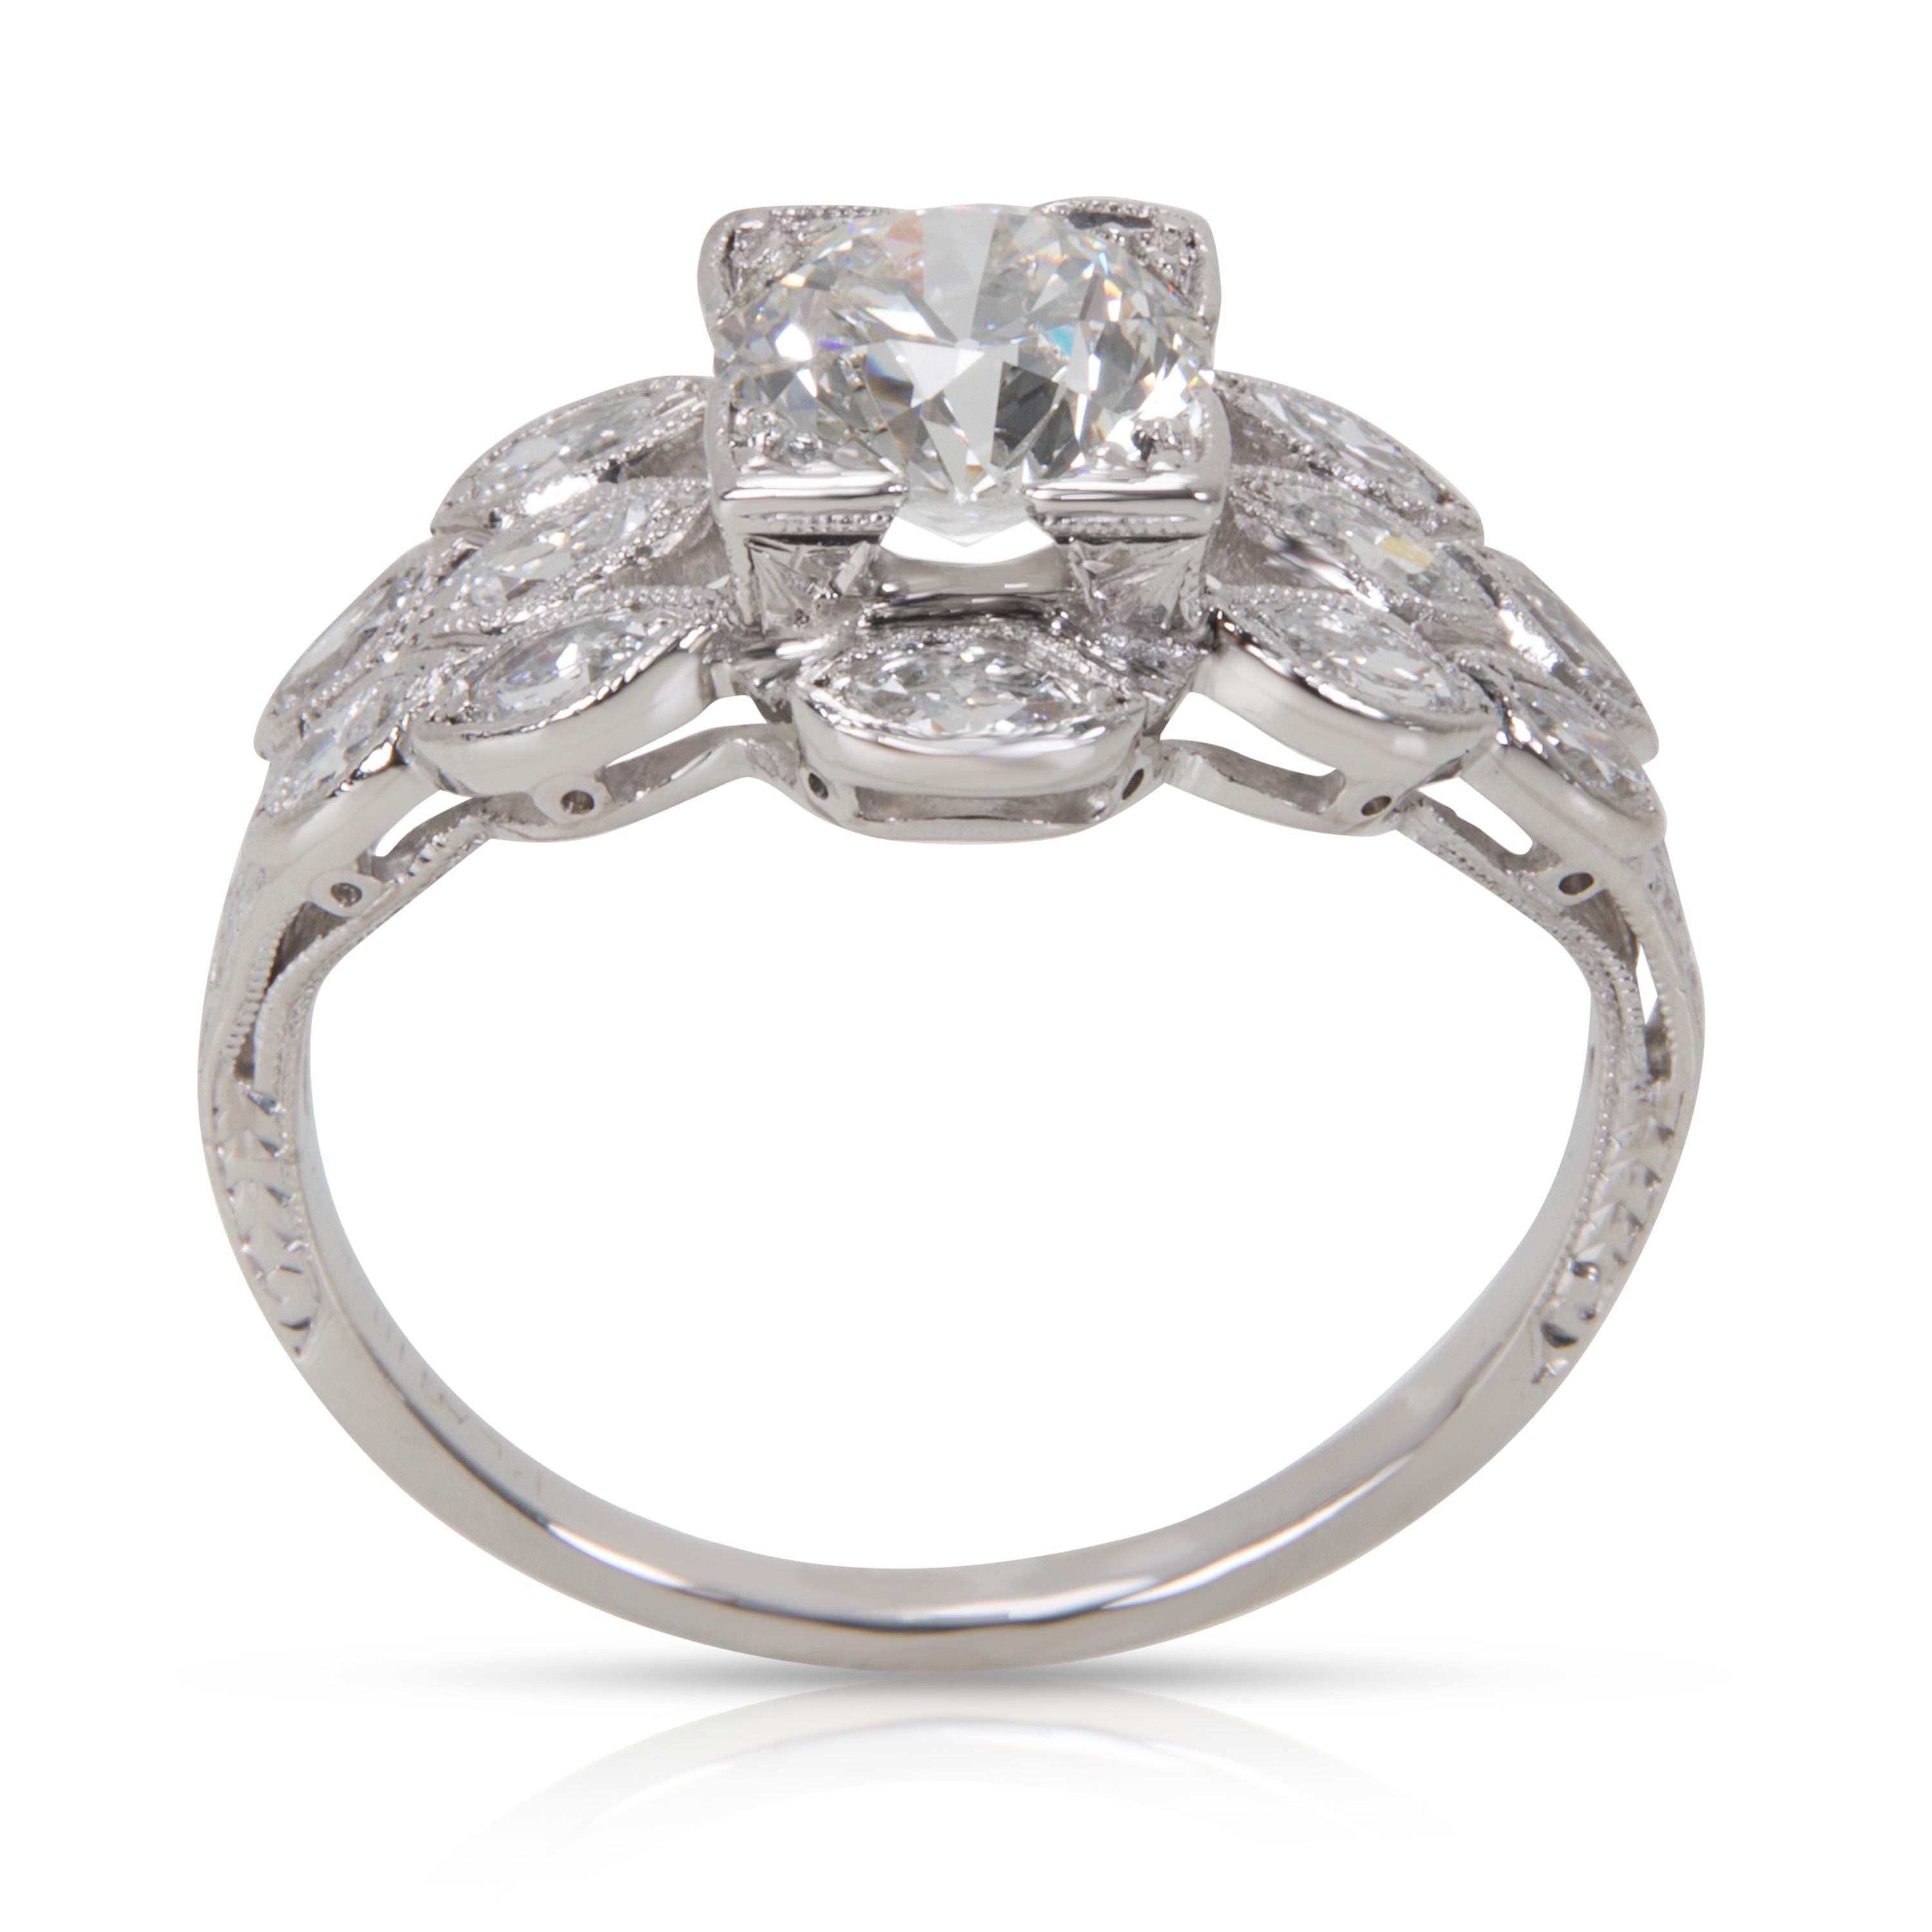 Round Cut IGI Certified Old Euro Cut Diamond Engagement Ring in Platinum '1.50 Carat'